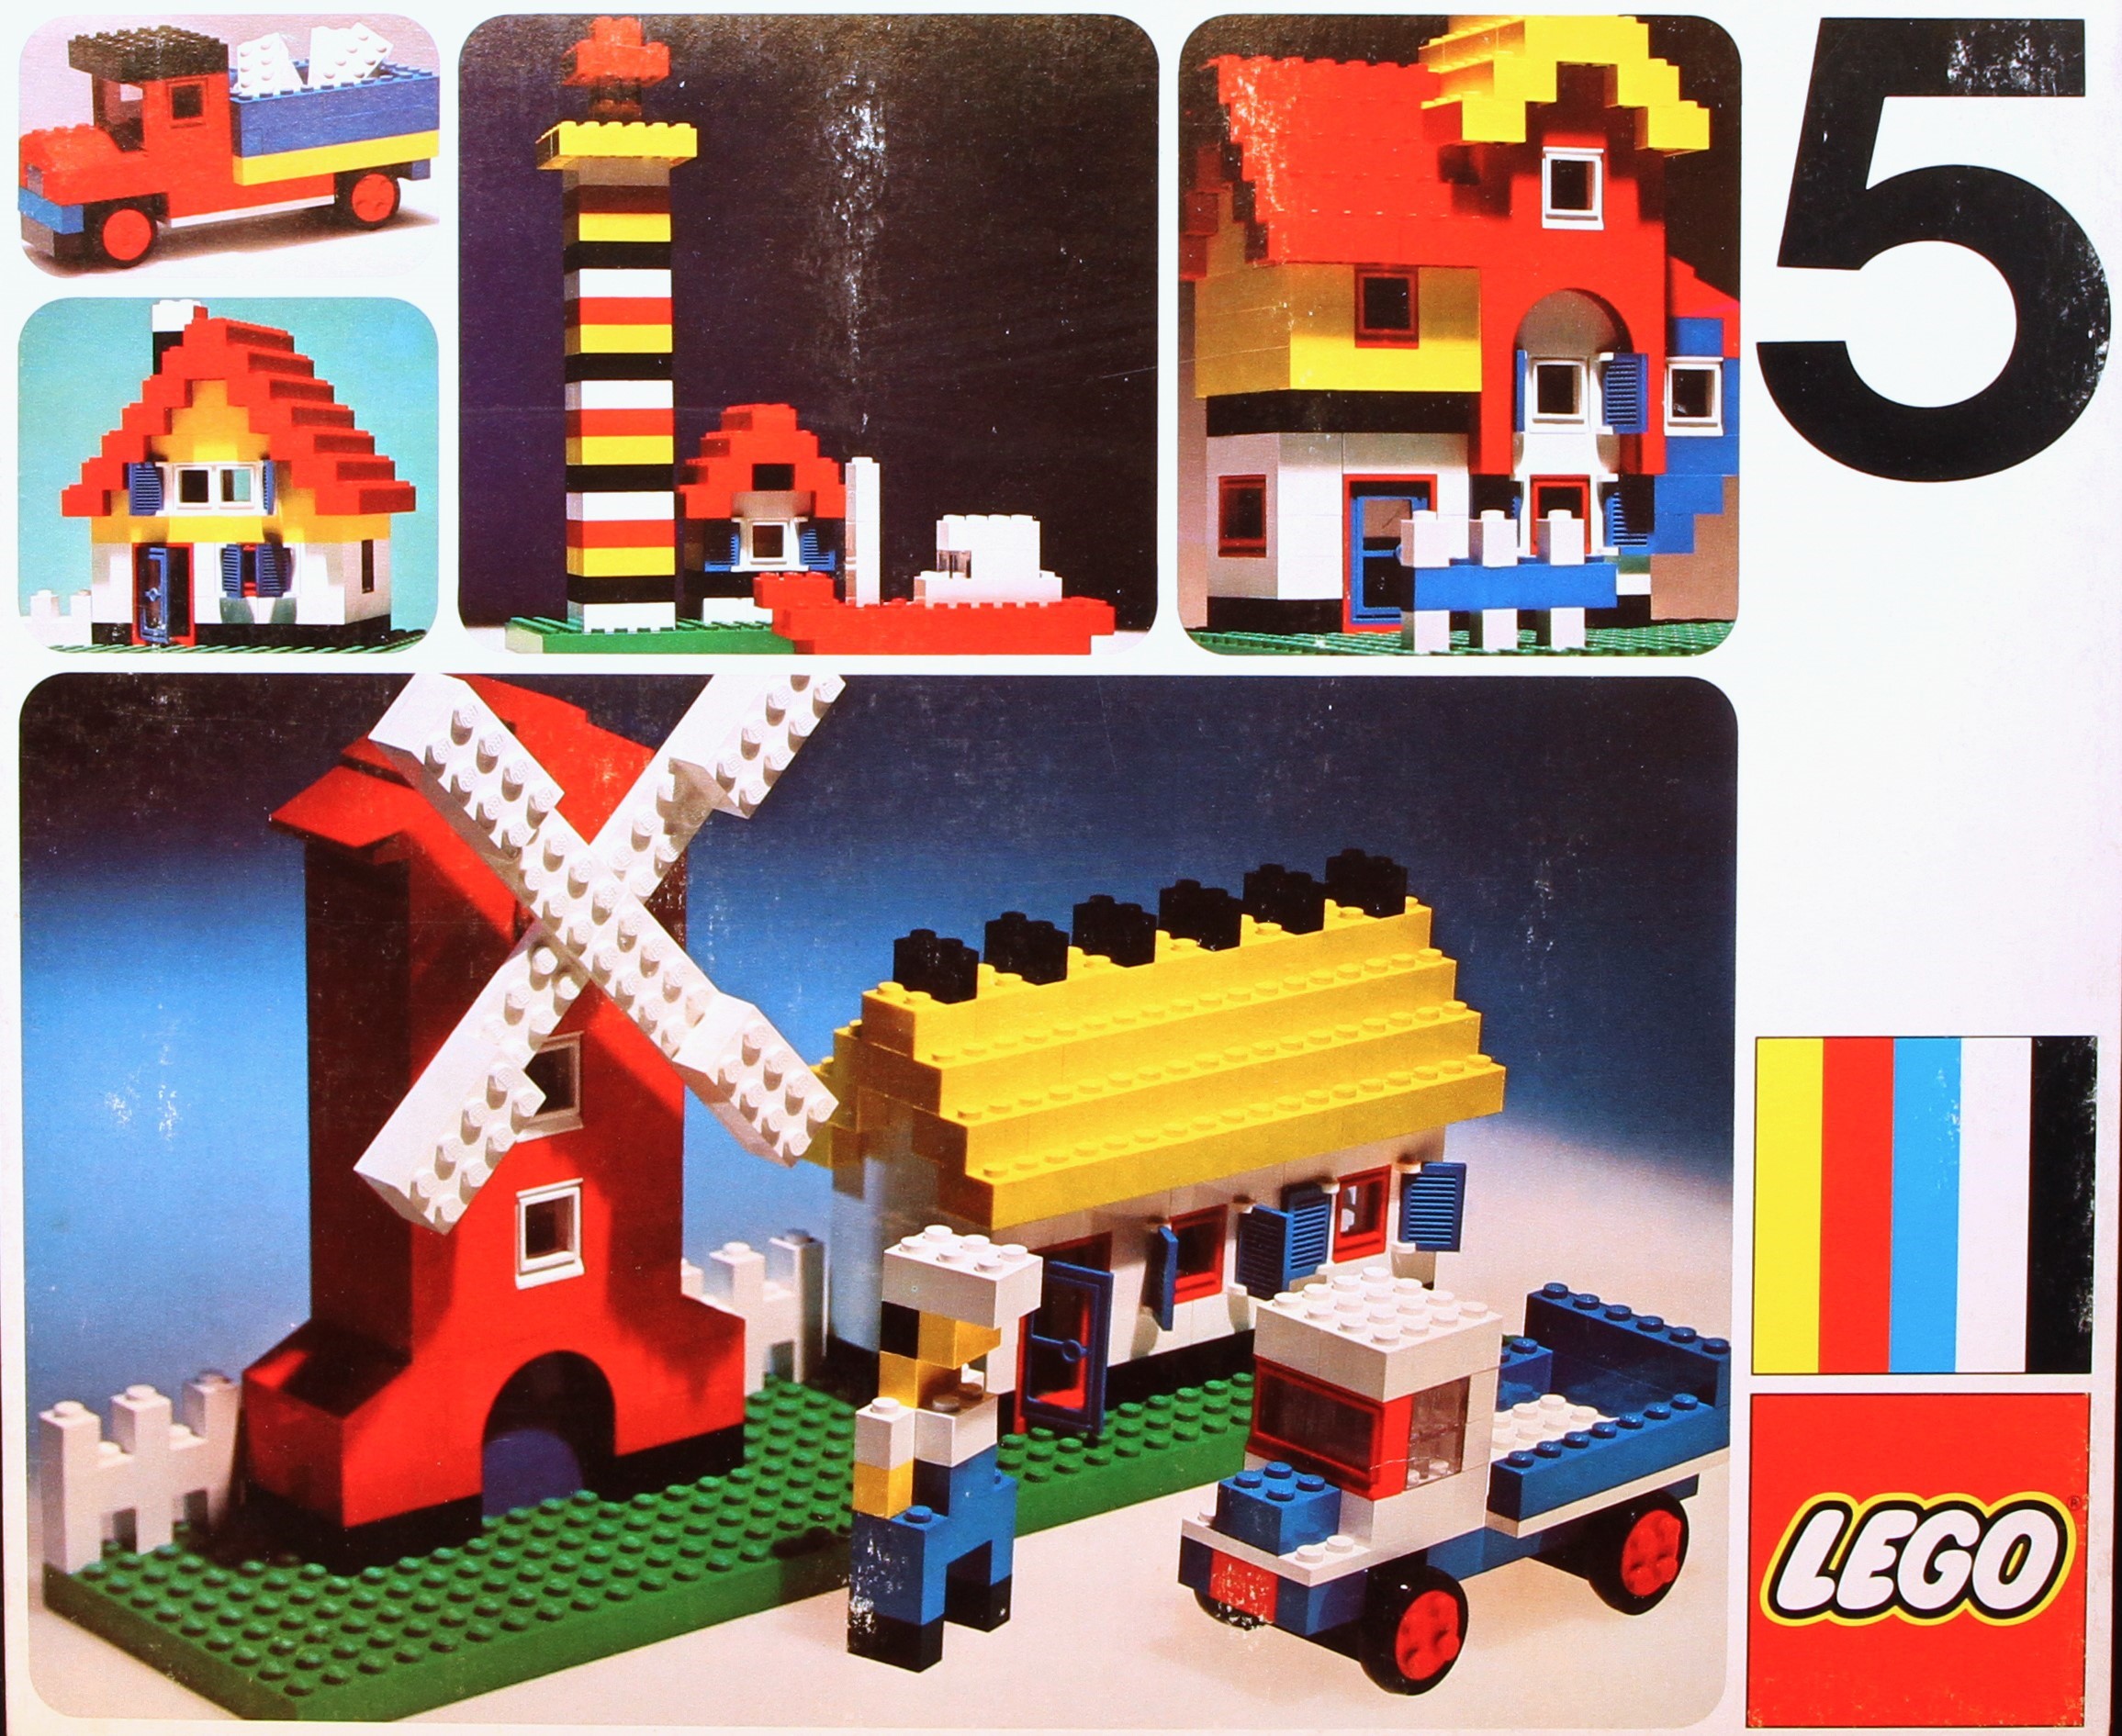 Dekking Zakje Eigenlijk 1973 | Brickset: LEGO set guide and database